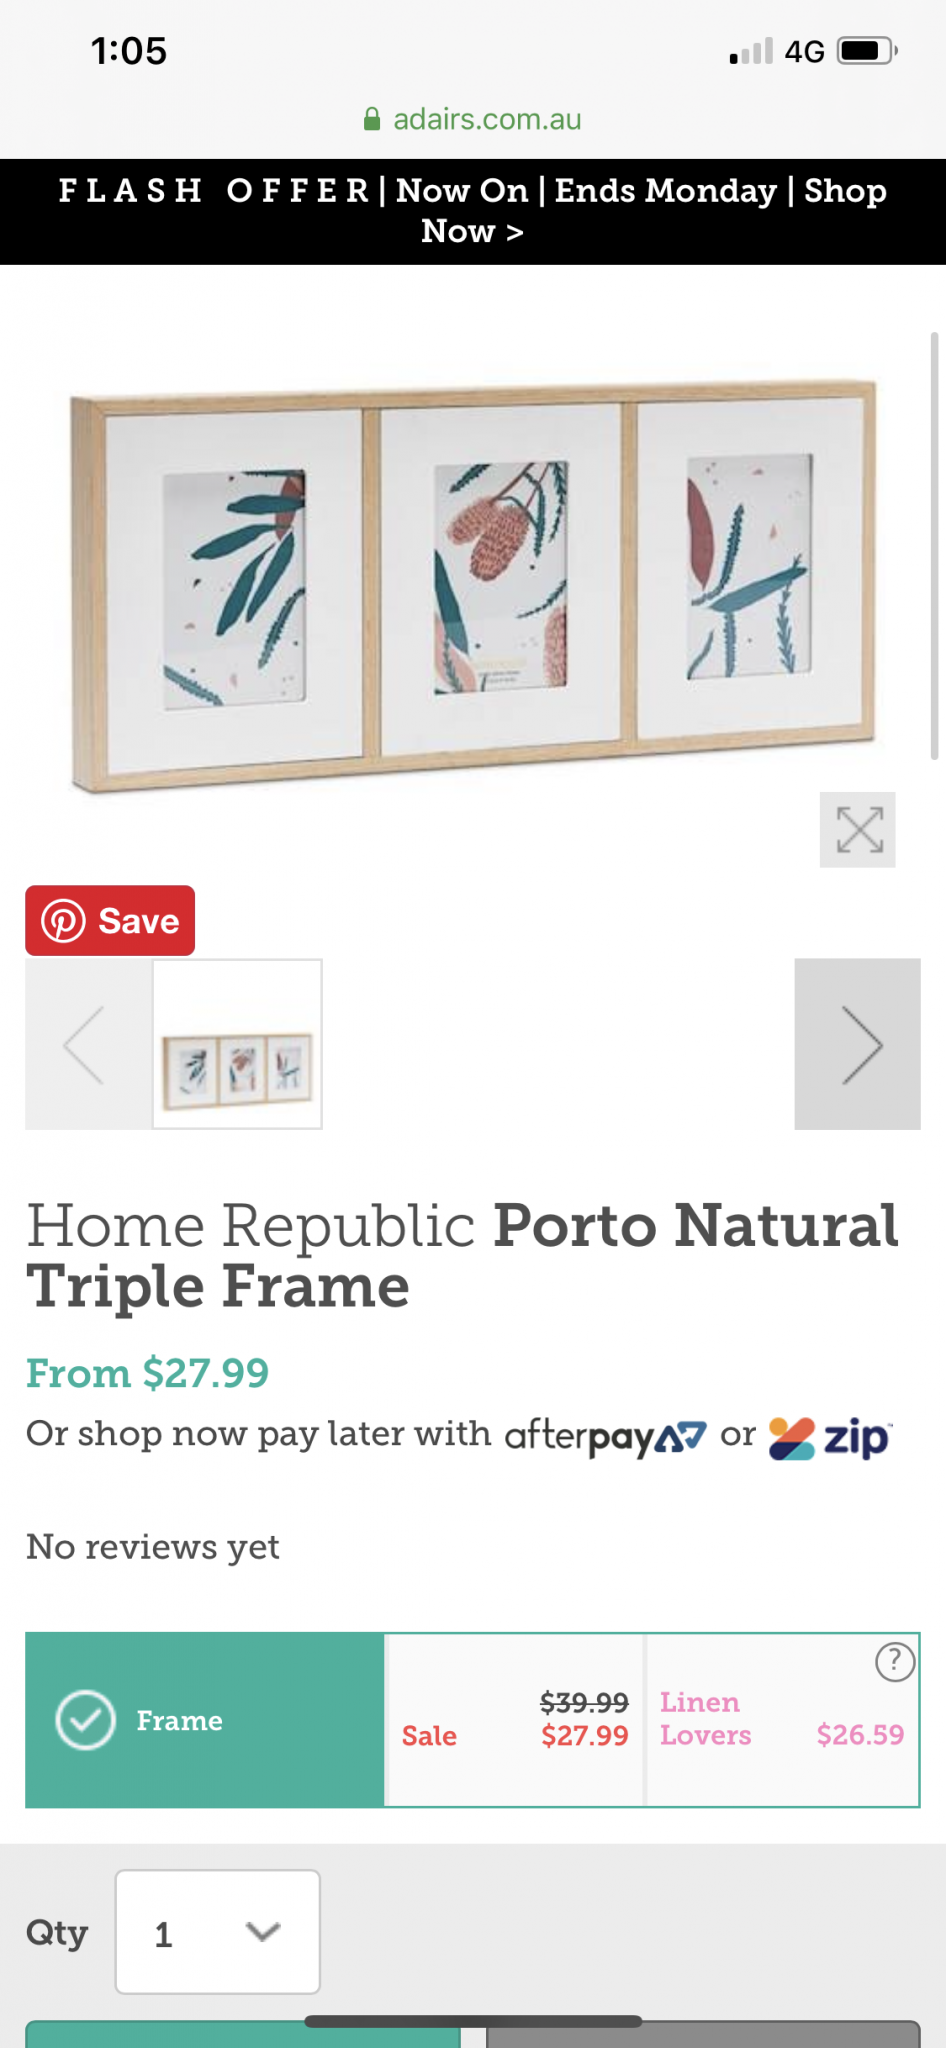 Home Republic Porto Natural Triple Frame